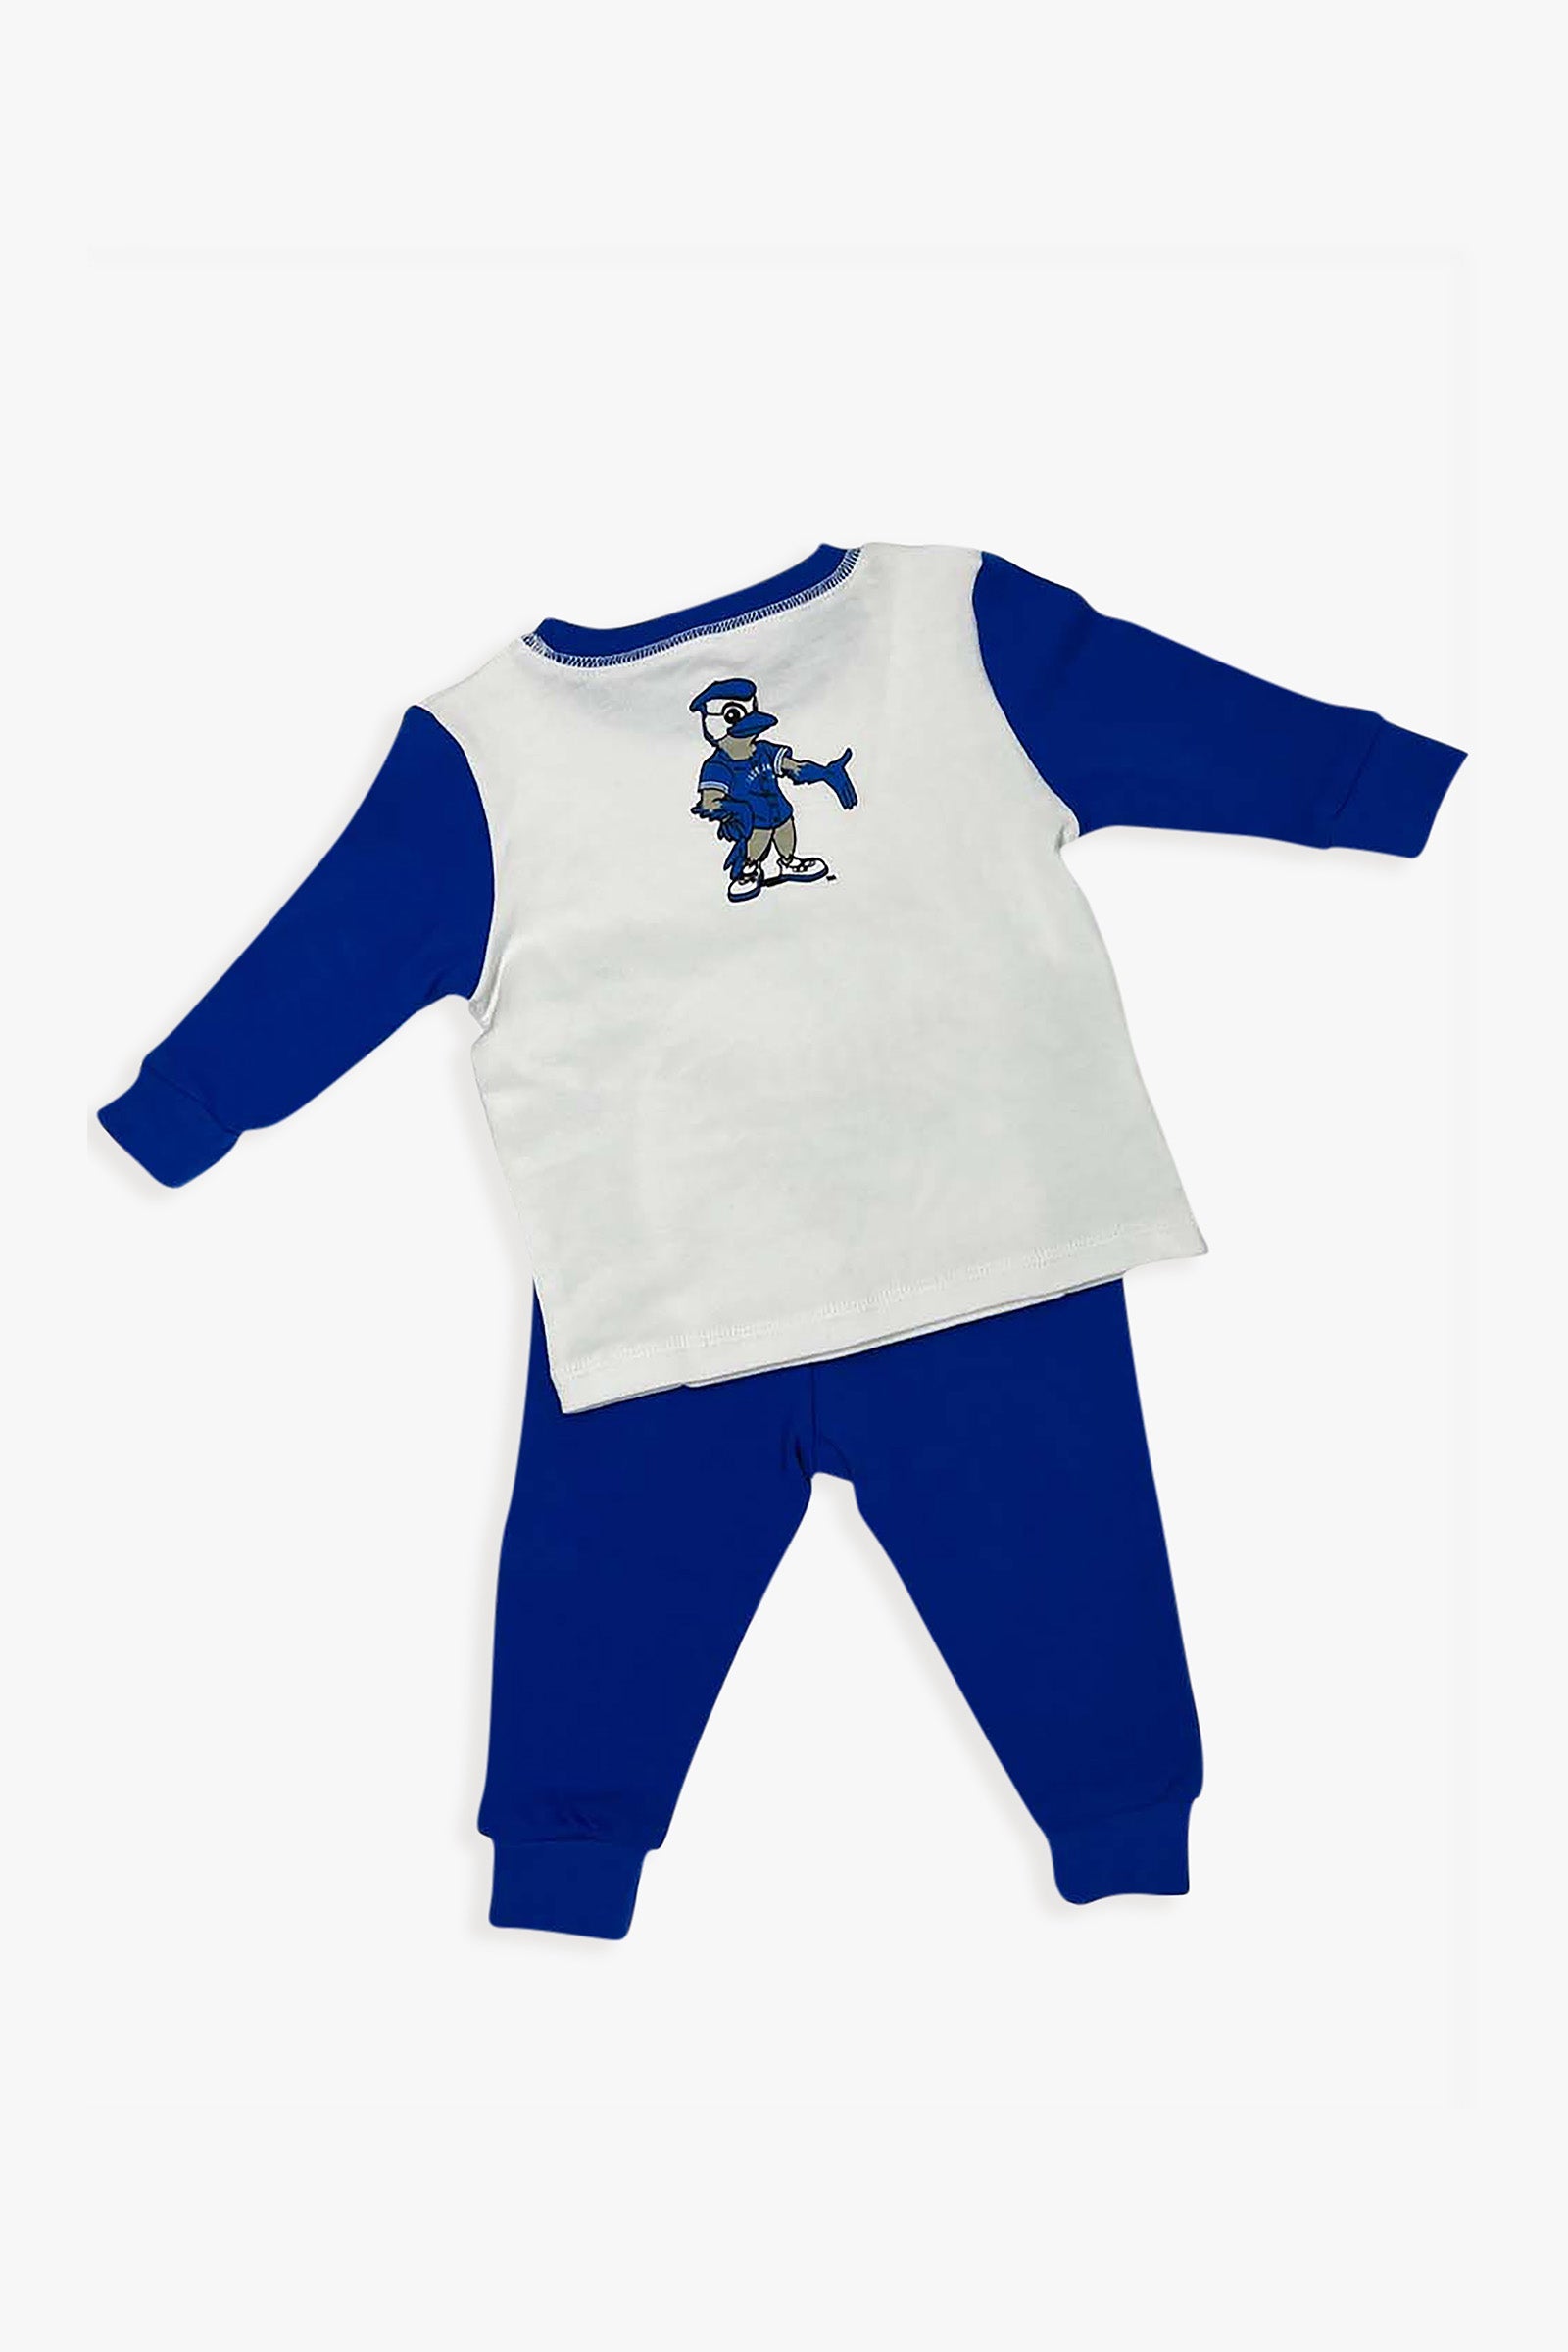 Gertex Toronto Blue Jays Baby Convert-A -Toy 2-Piece Shirt & Pant Set